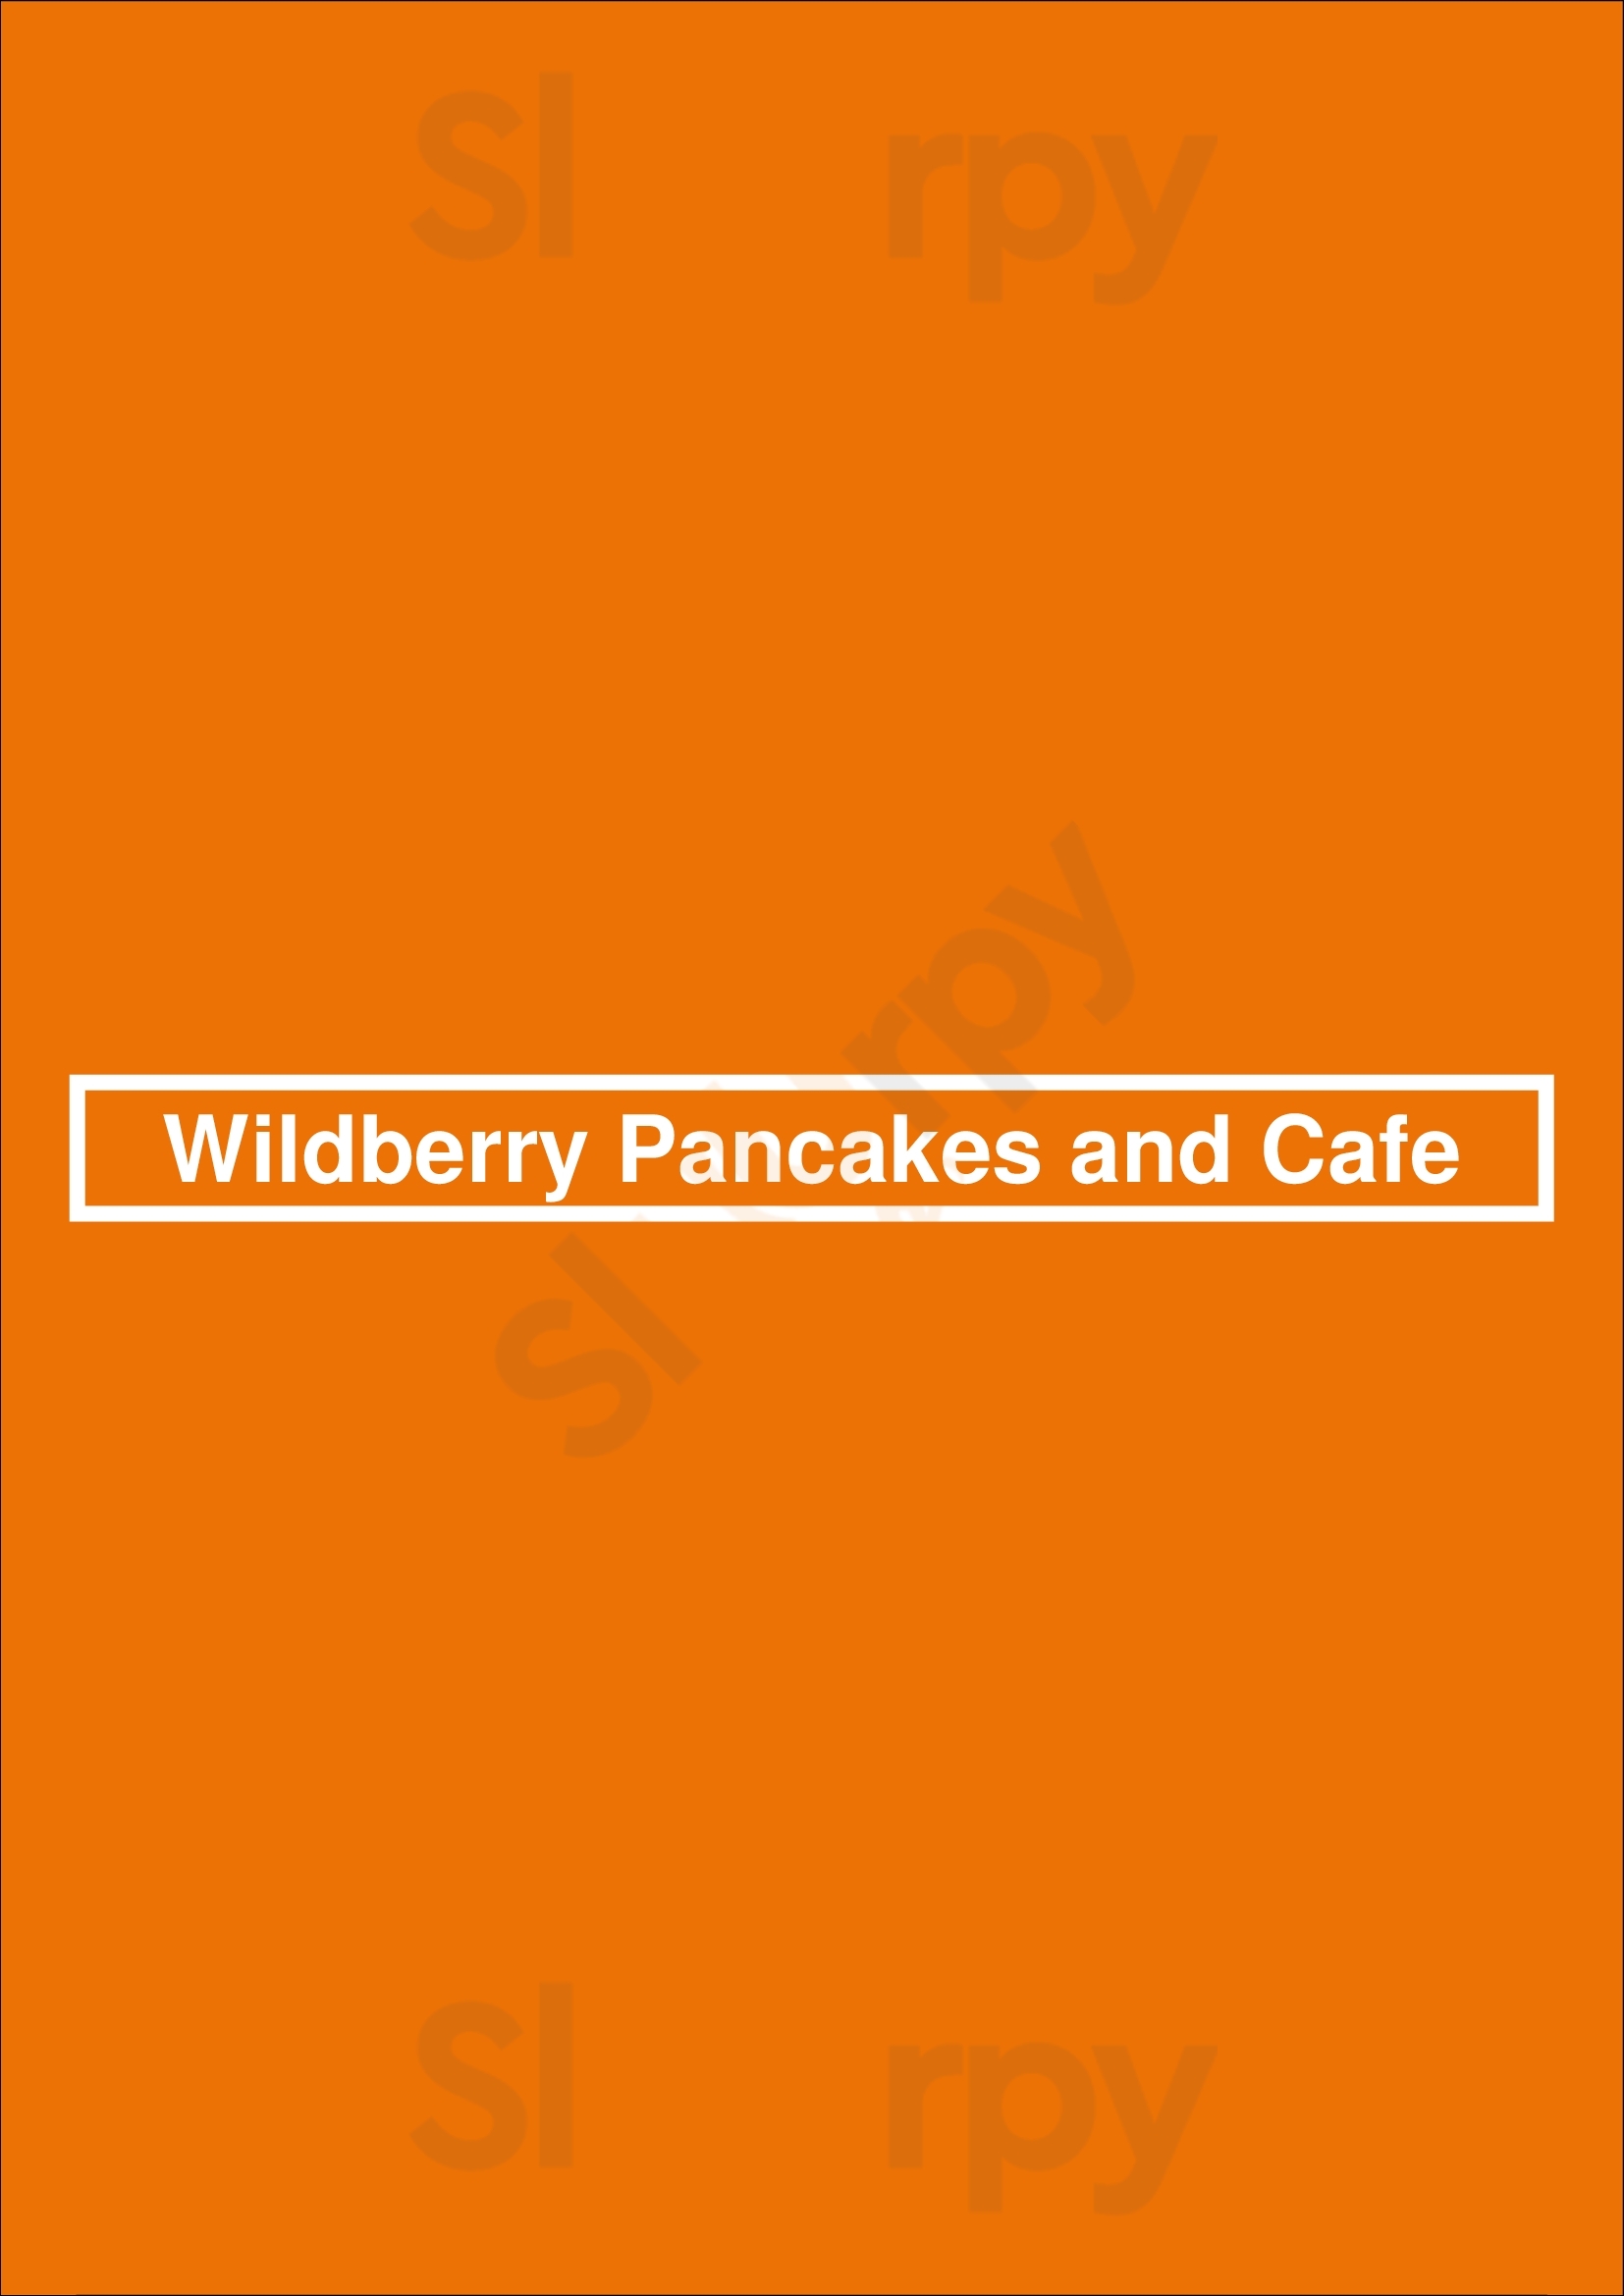 Wildberry Pancakes And Cafe Libertyville Menu - 1